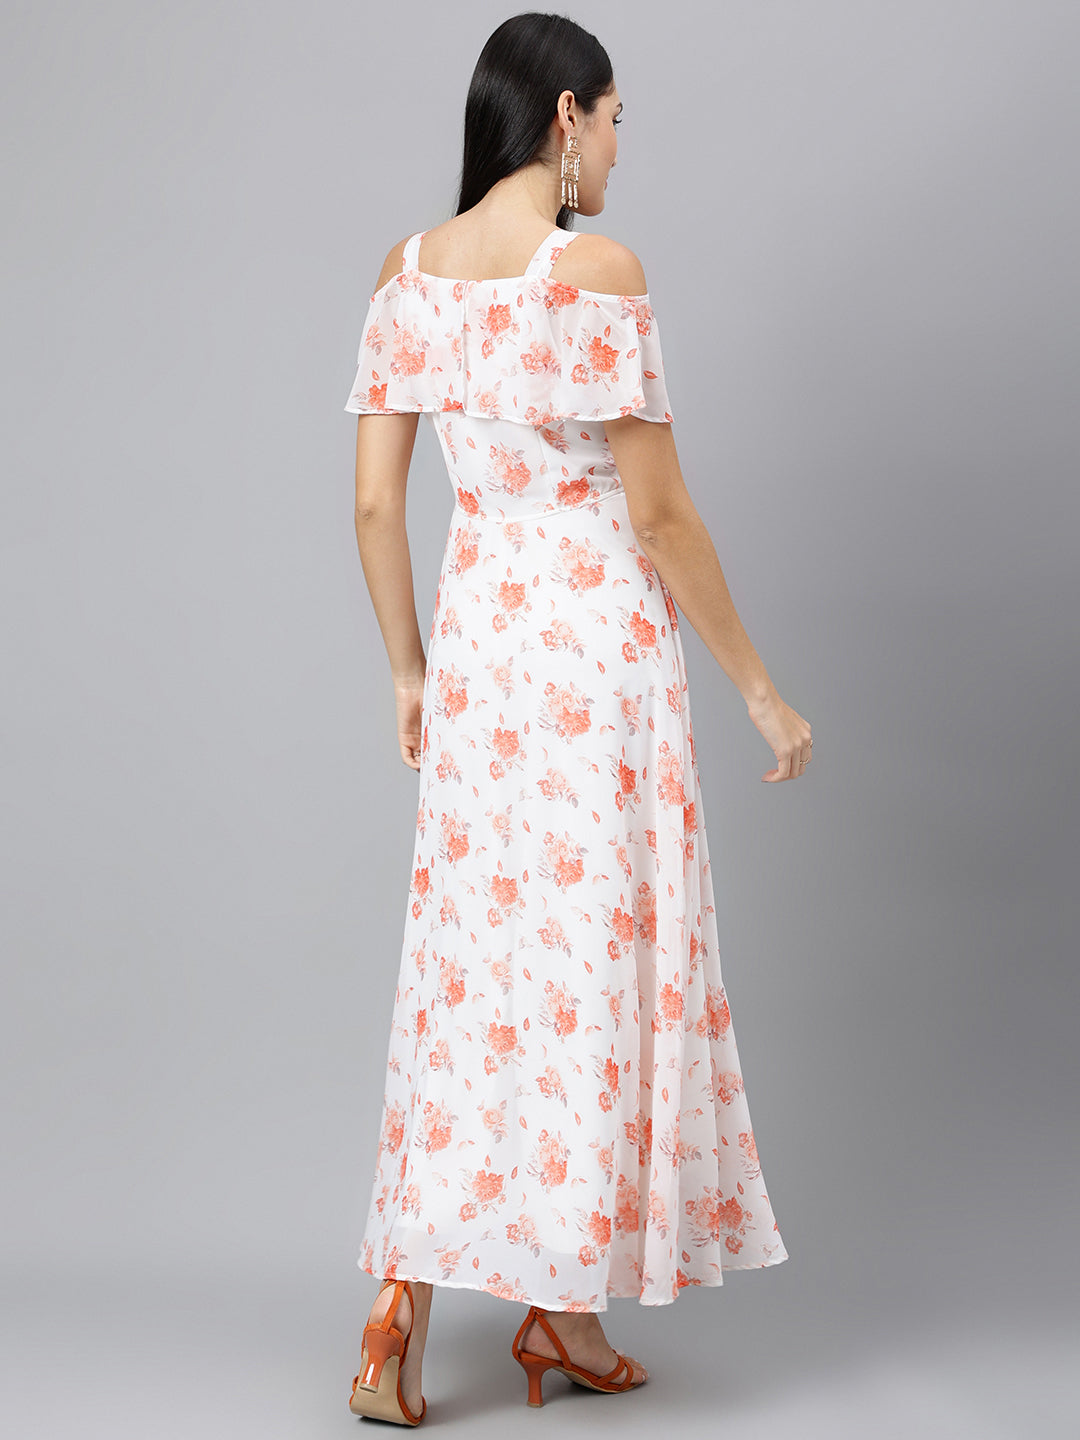 Orange Printed Sleeveless Casual Dress